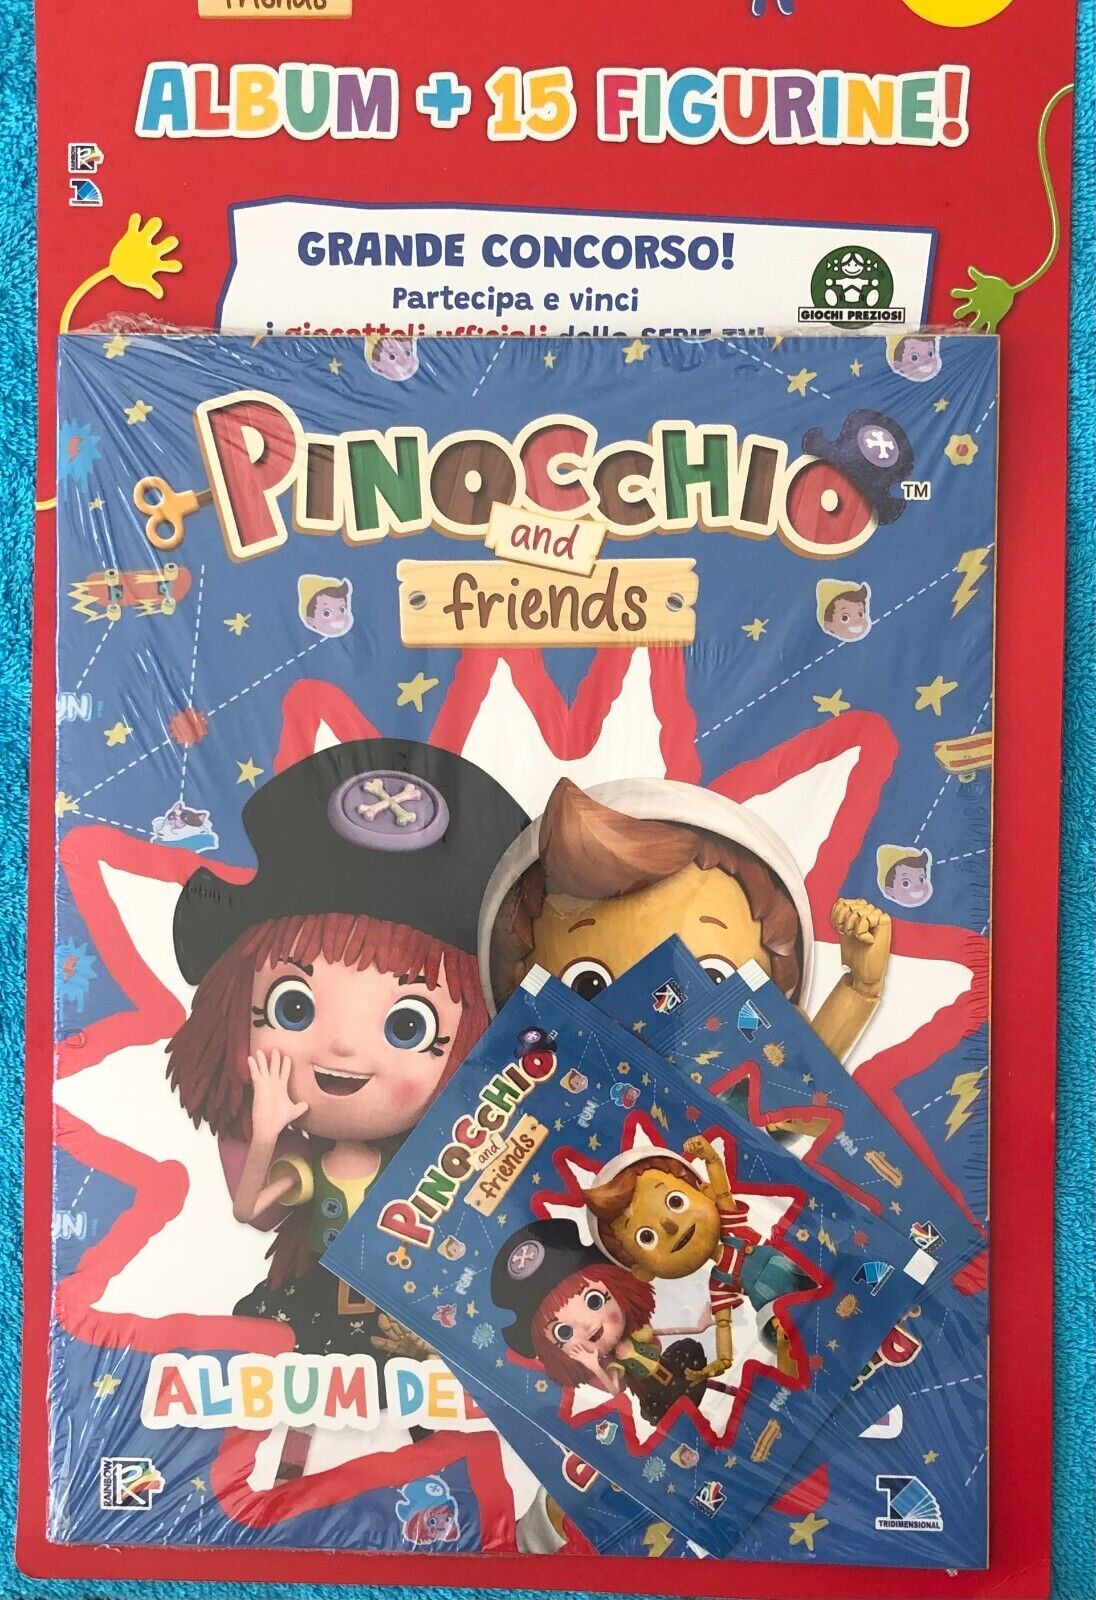 Pinocchio & Friends Album+15 figurine di Tridimensional S.r.l.,  2022,  Rainbow